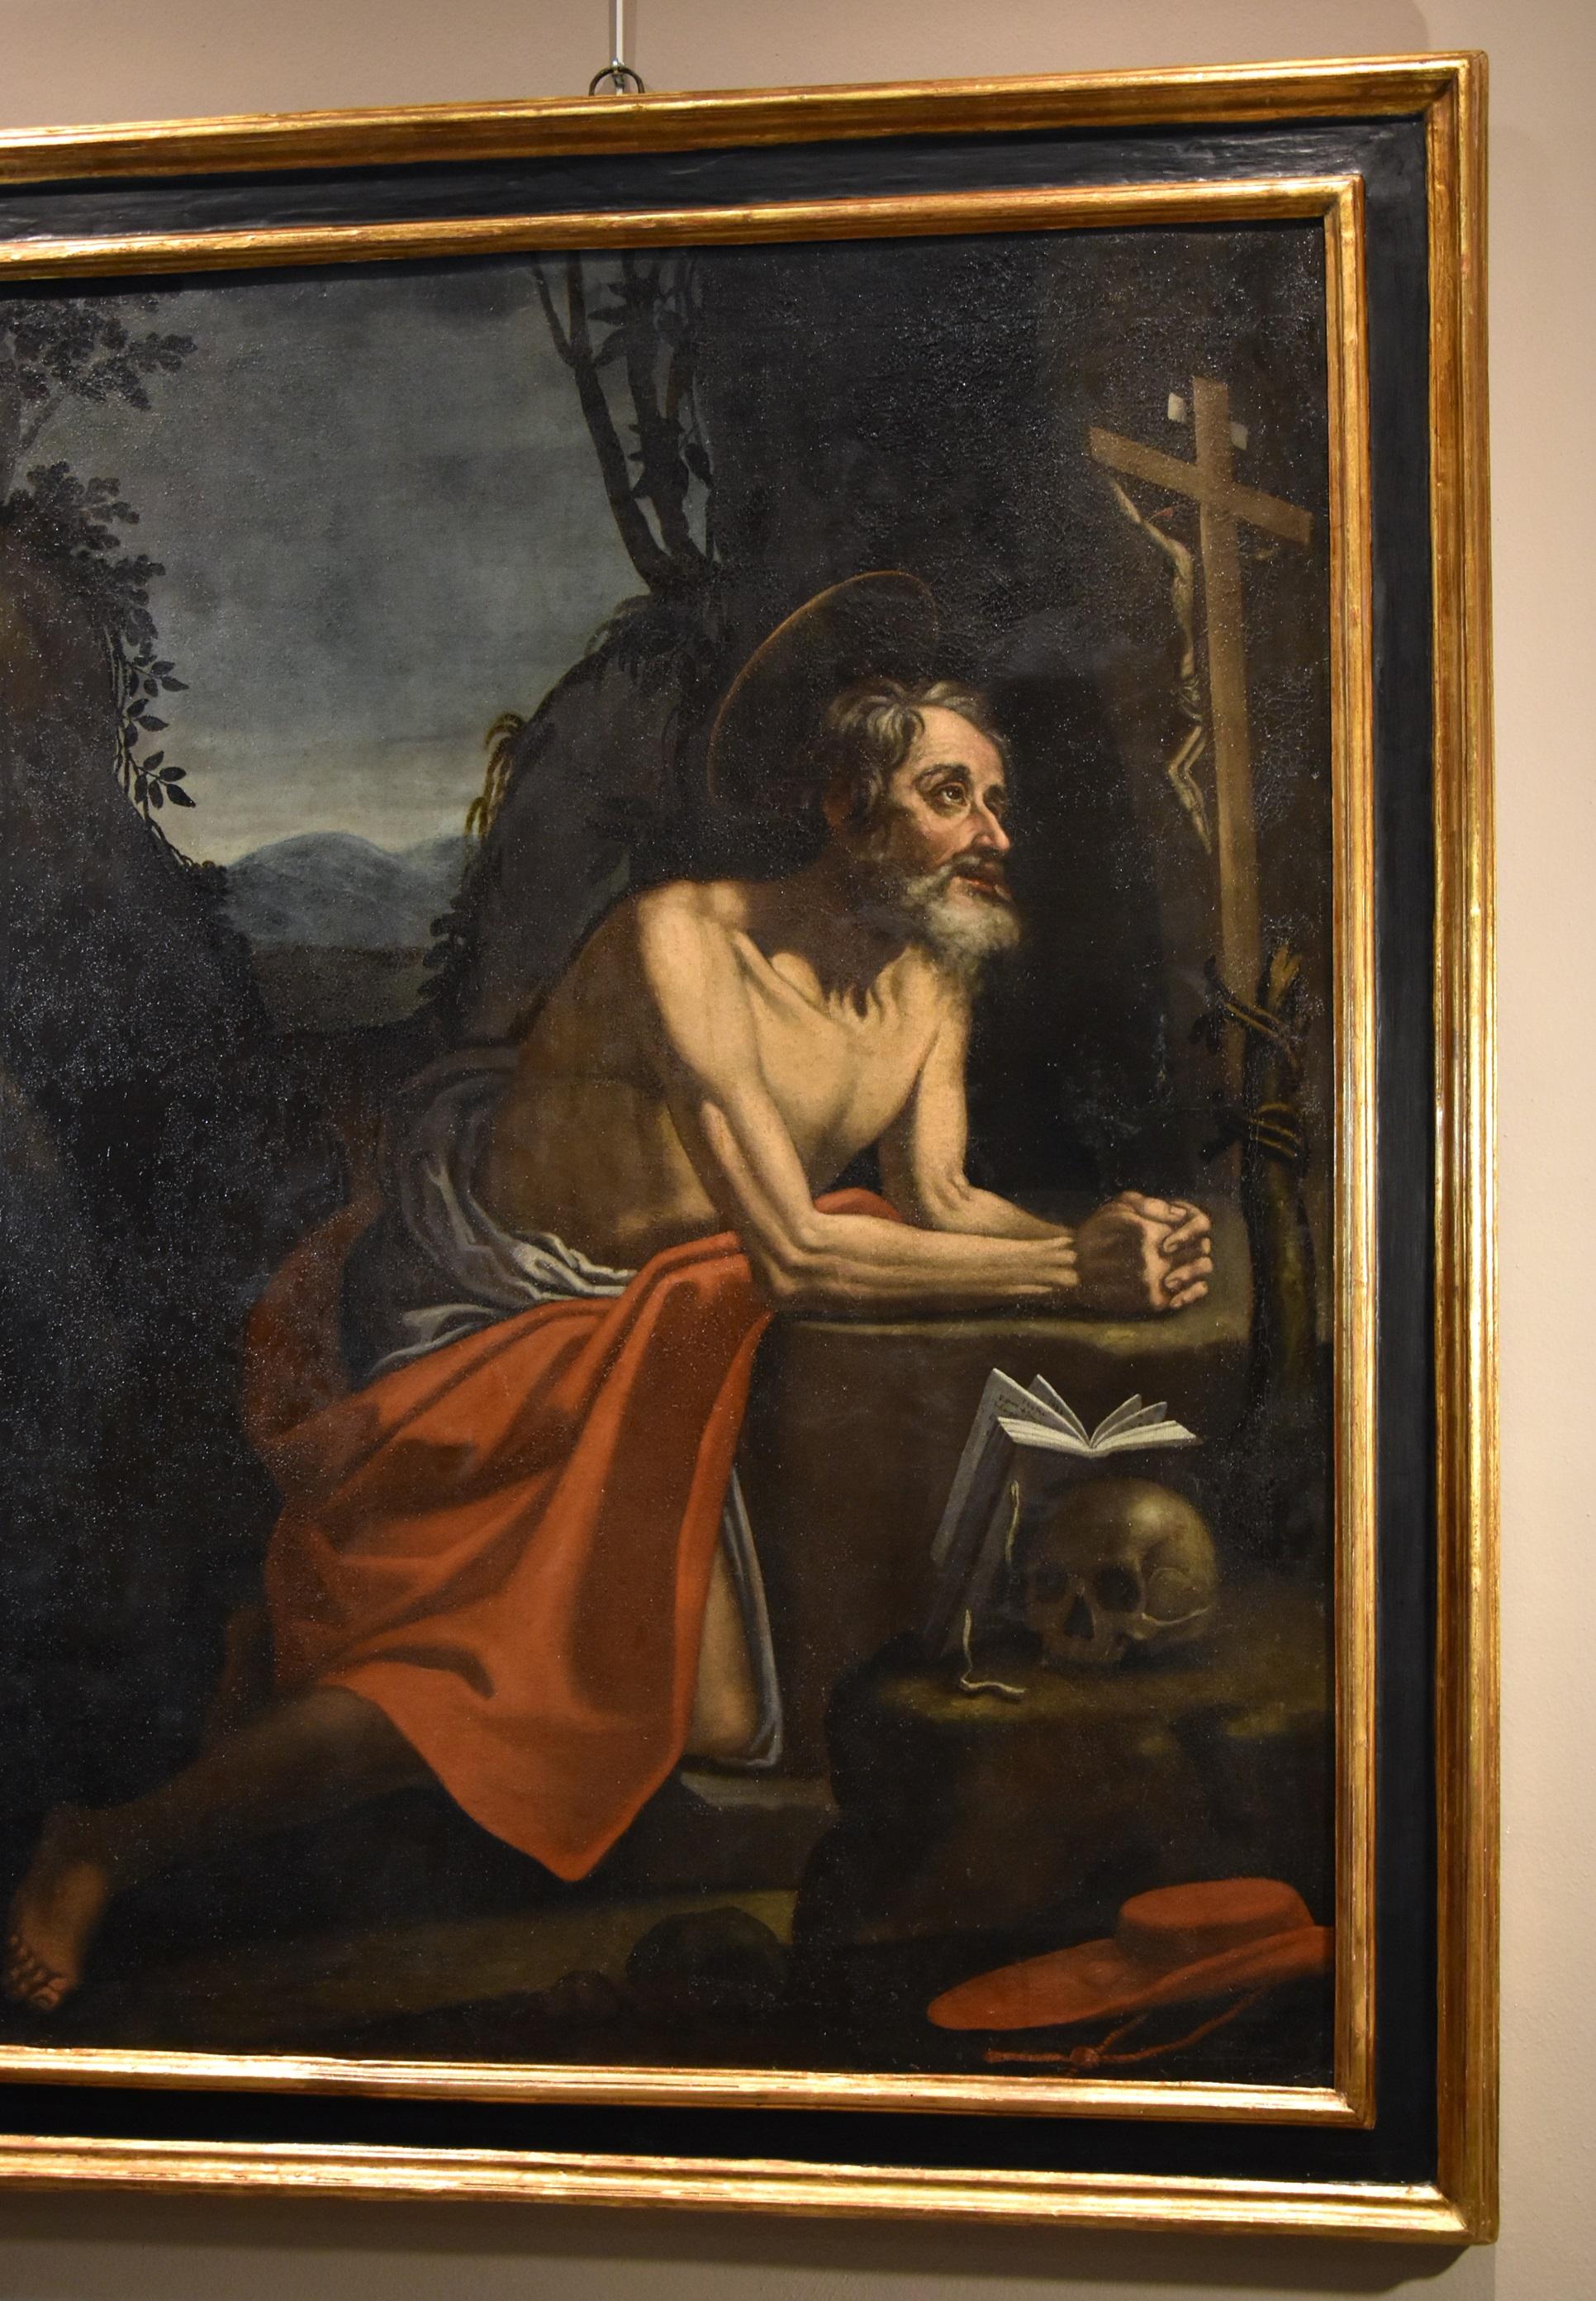 Saint Jerome De Somer Paint Oil on canvas 17th Century Old master Flemish Art For Sale 8